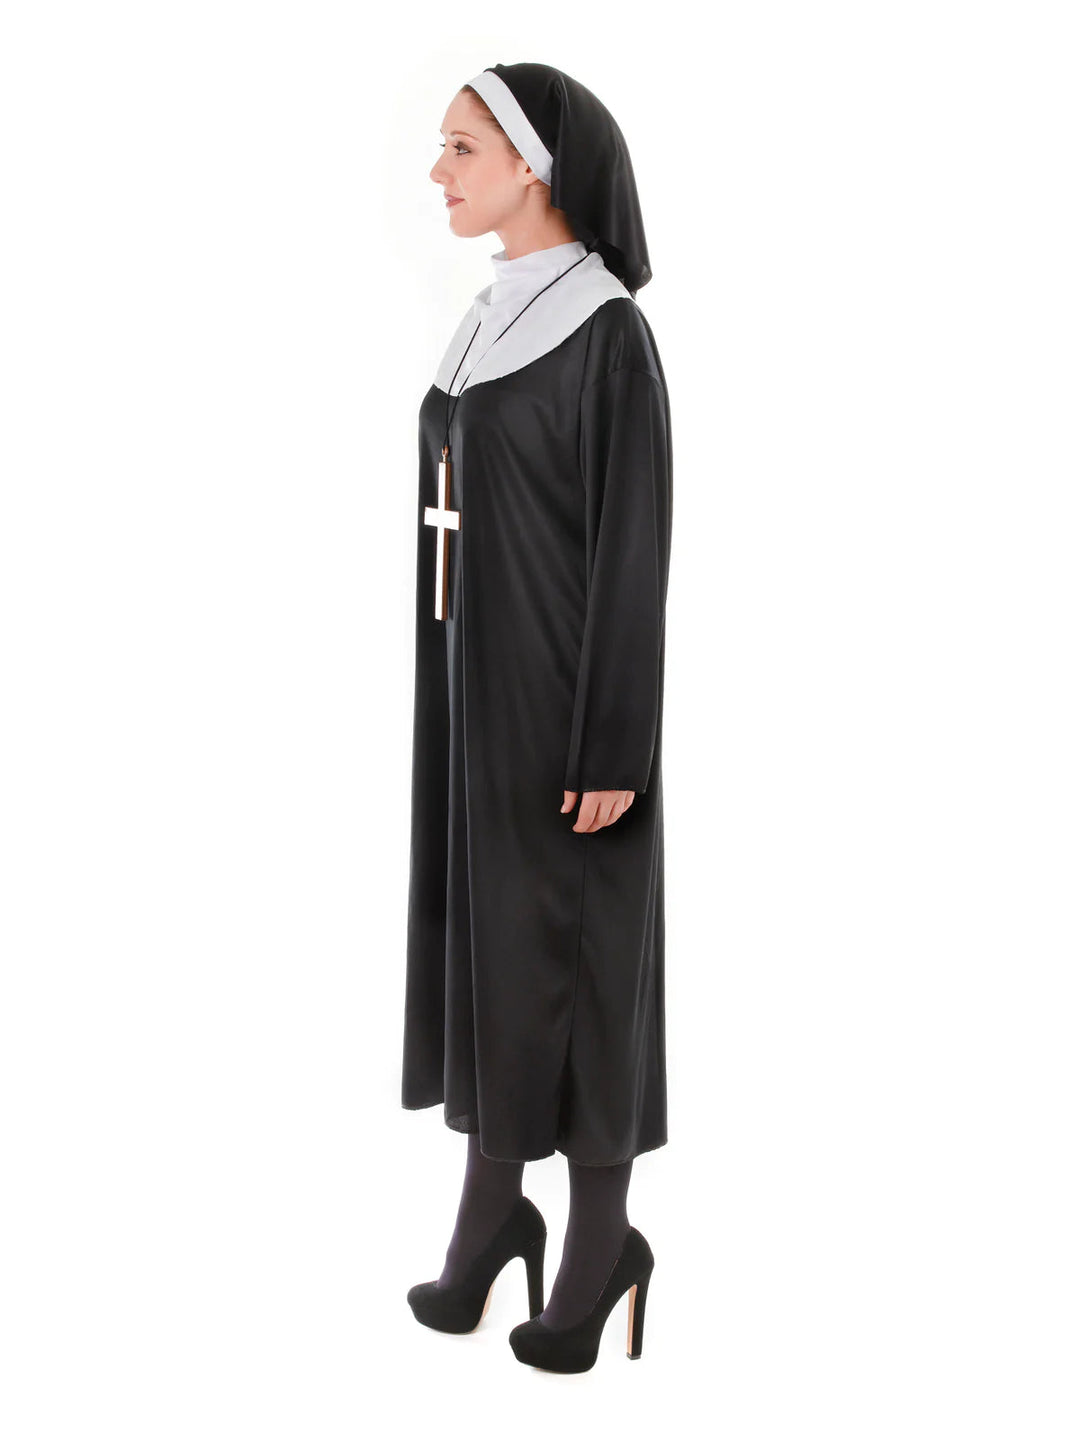 Nun Adult Costume Plus Size Black Robes_6